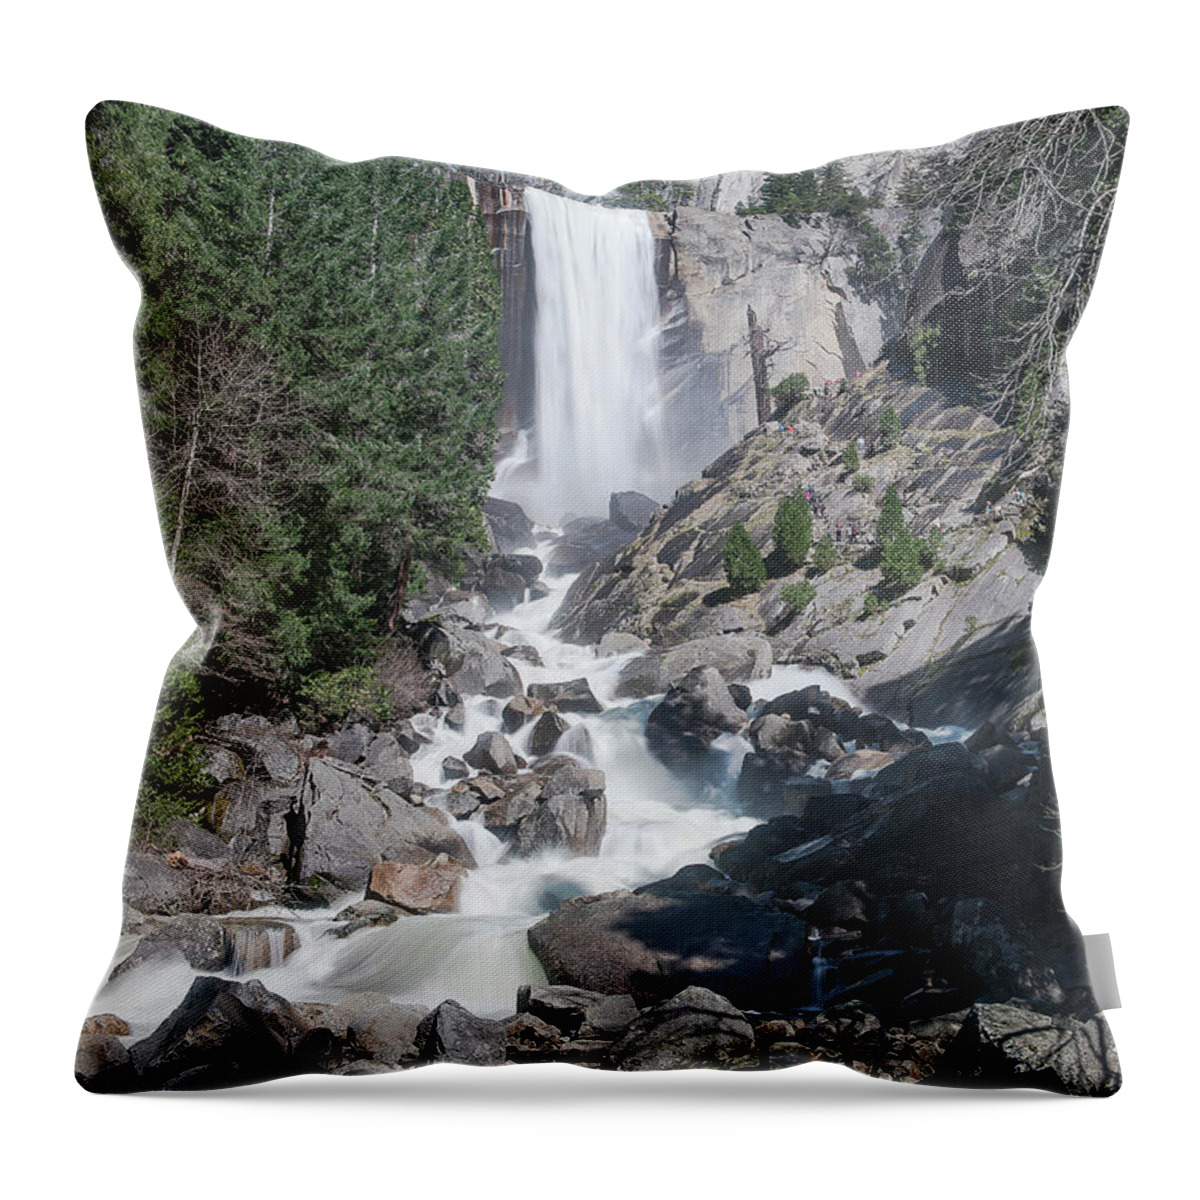 2018 Calendar Throw Pillow featuring the photograph 2018 Yosemite Calendar March by Bill Roberts